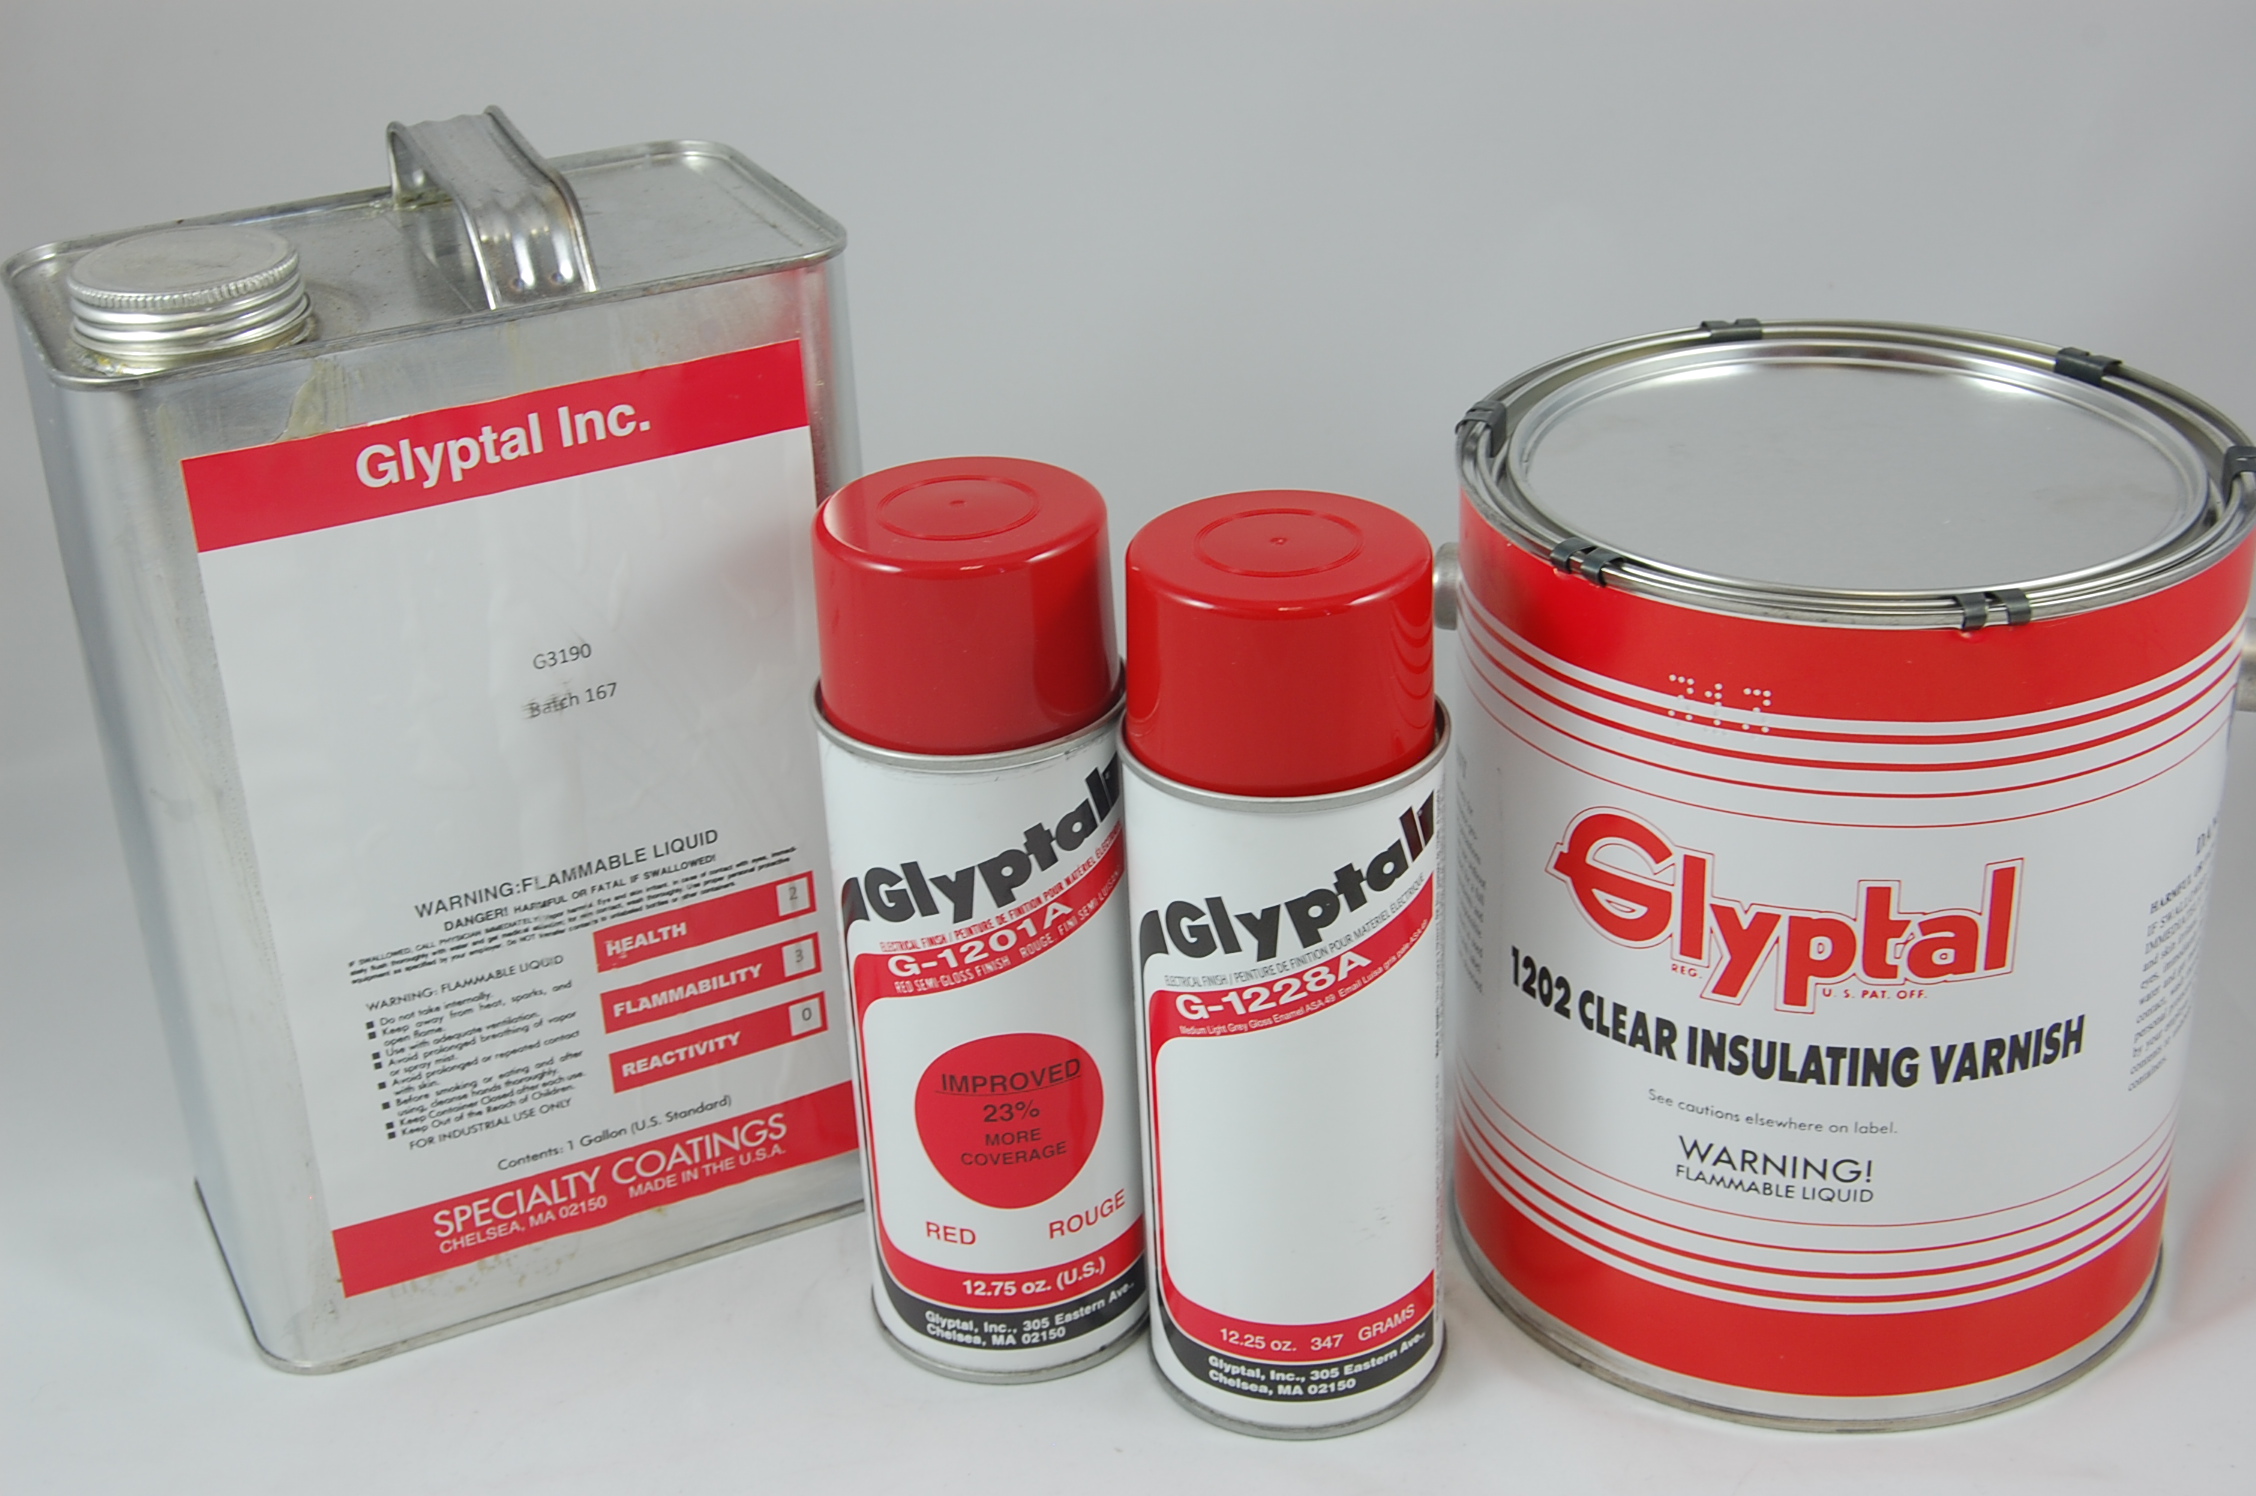 Glyptal 7526F General Purpose Thermoplastic Adhesive, blue, 1 GALLON can